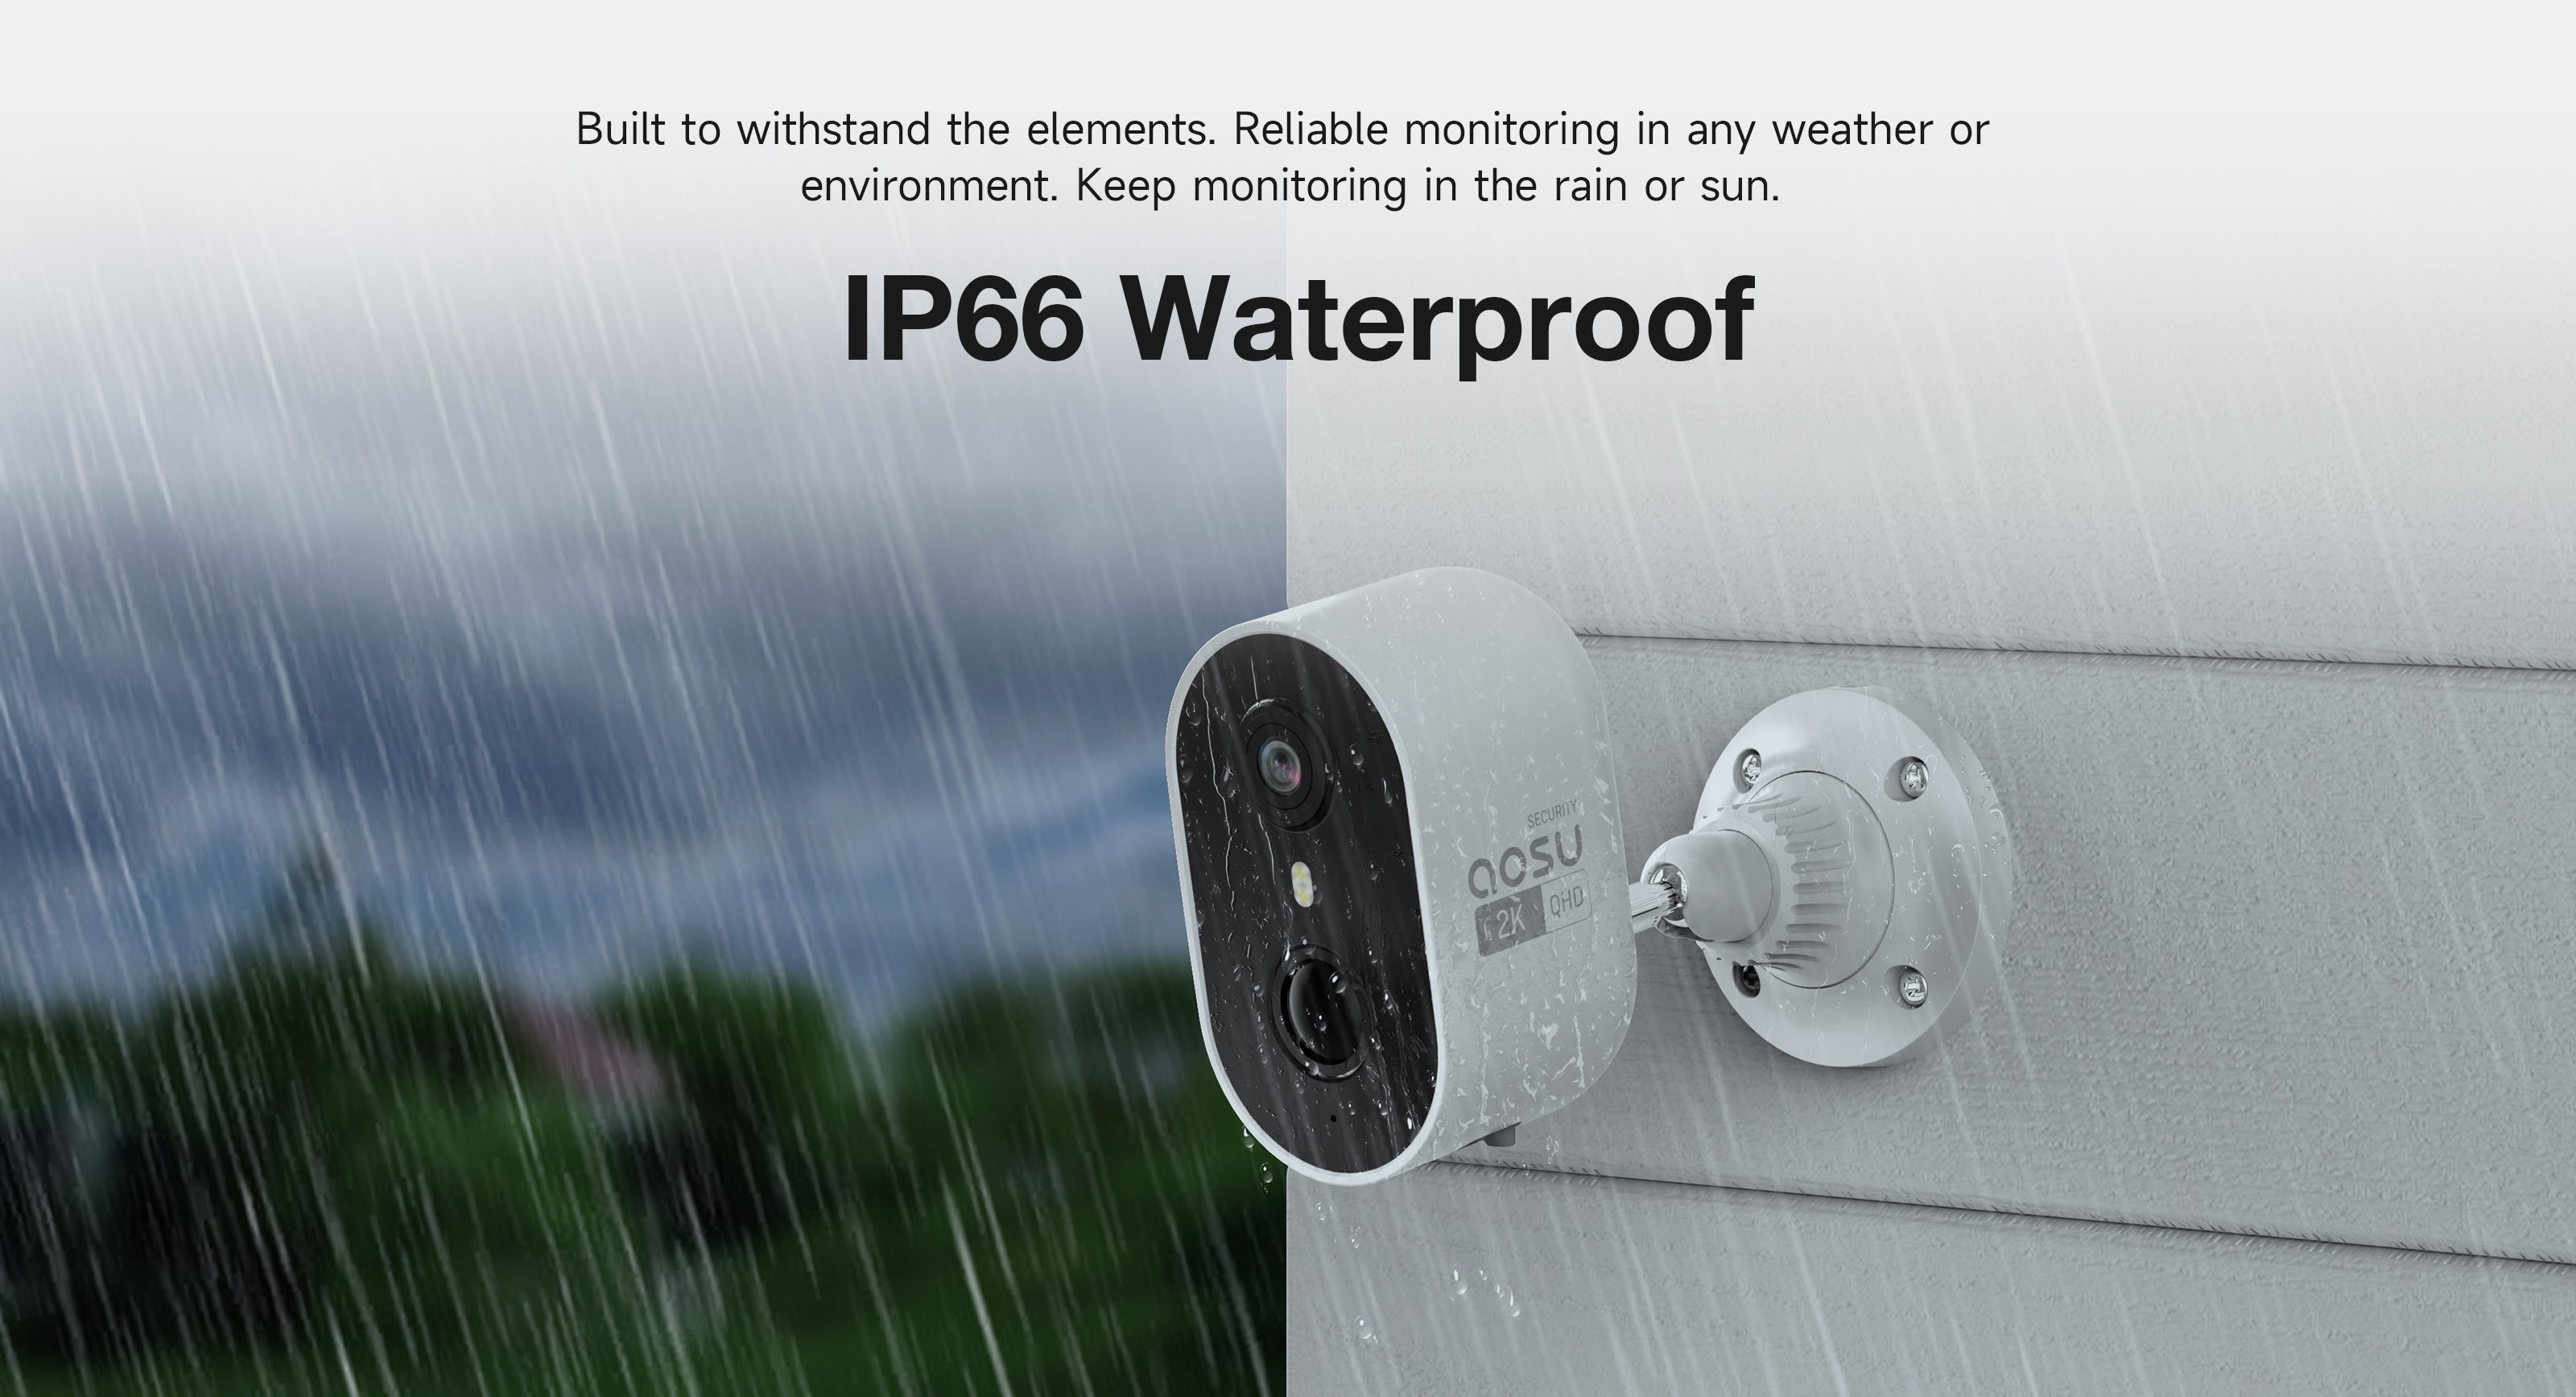 aosu's security camera features IP66 waterproof